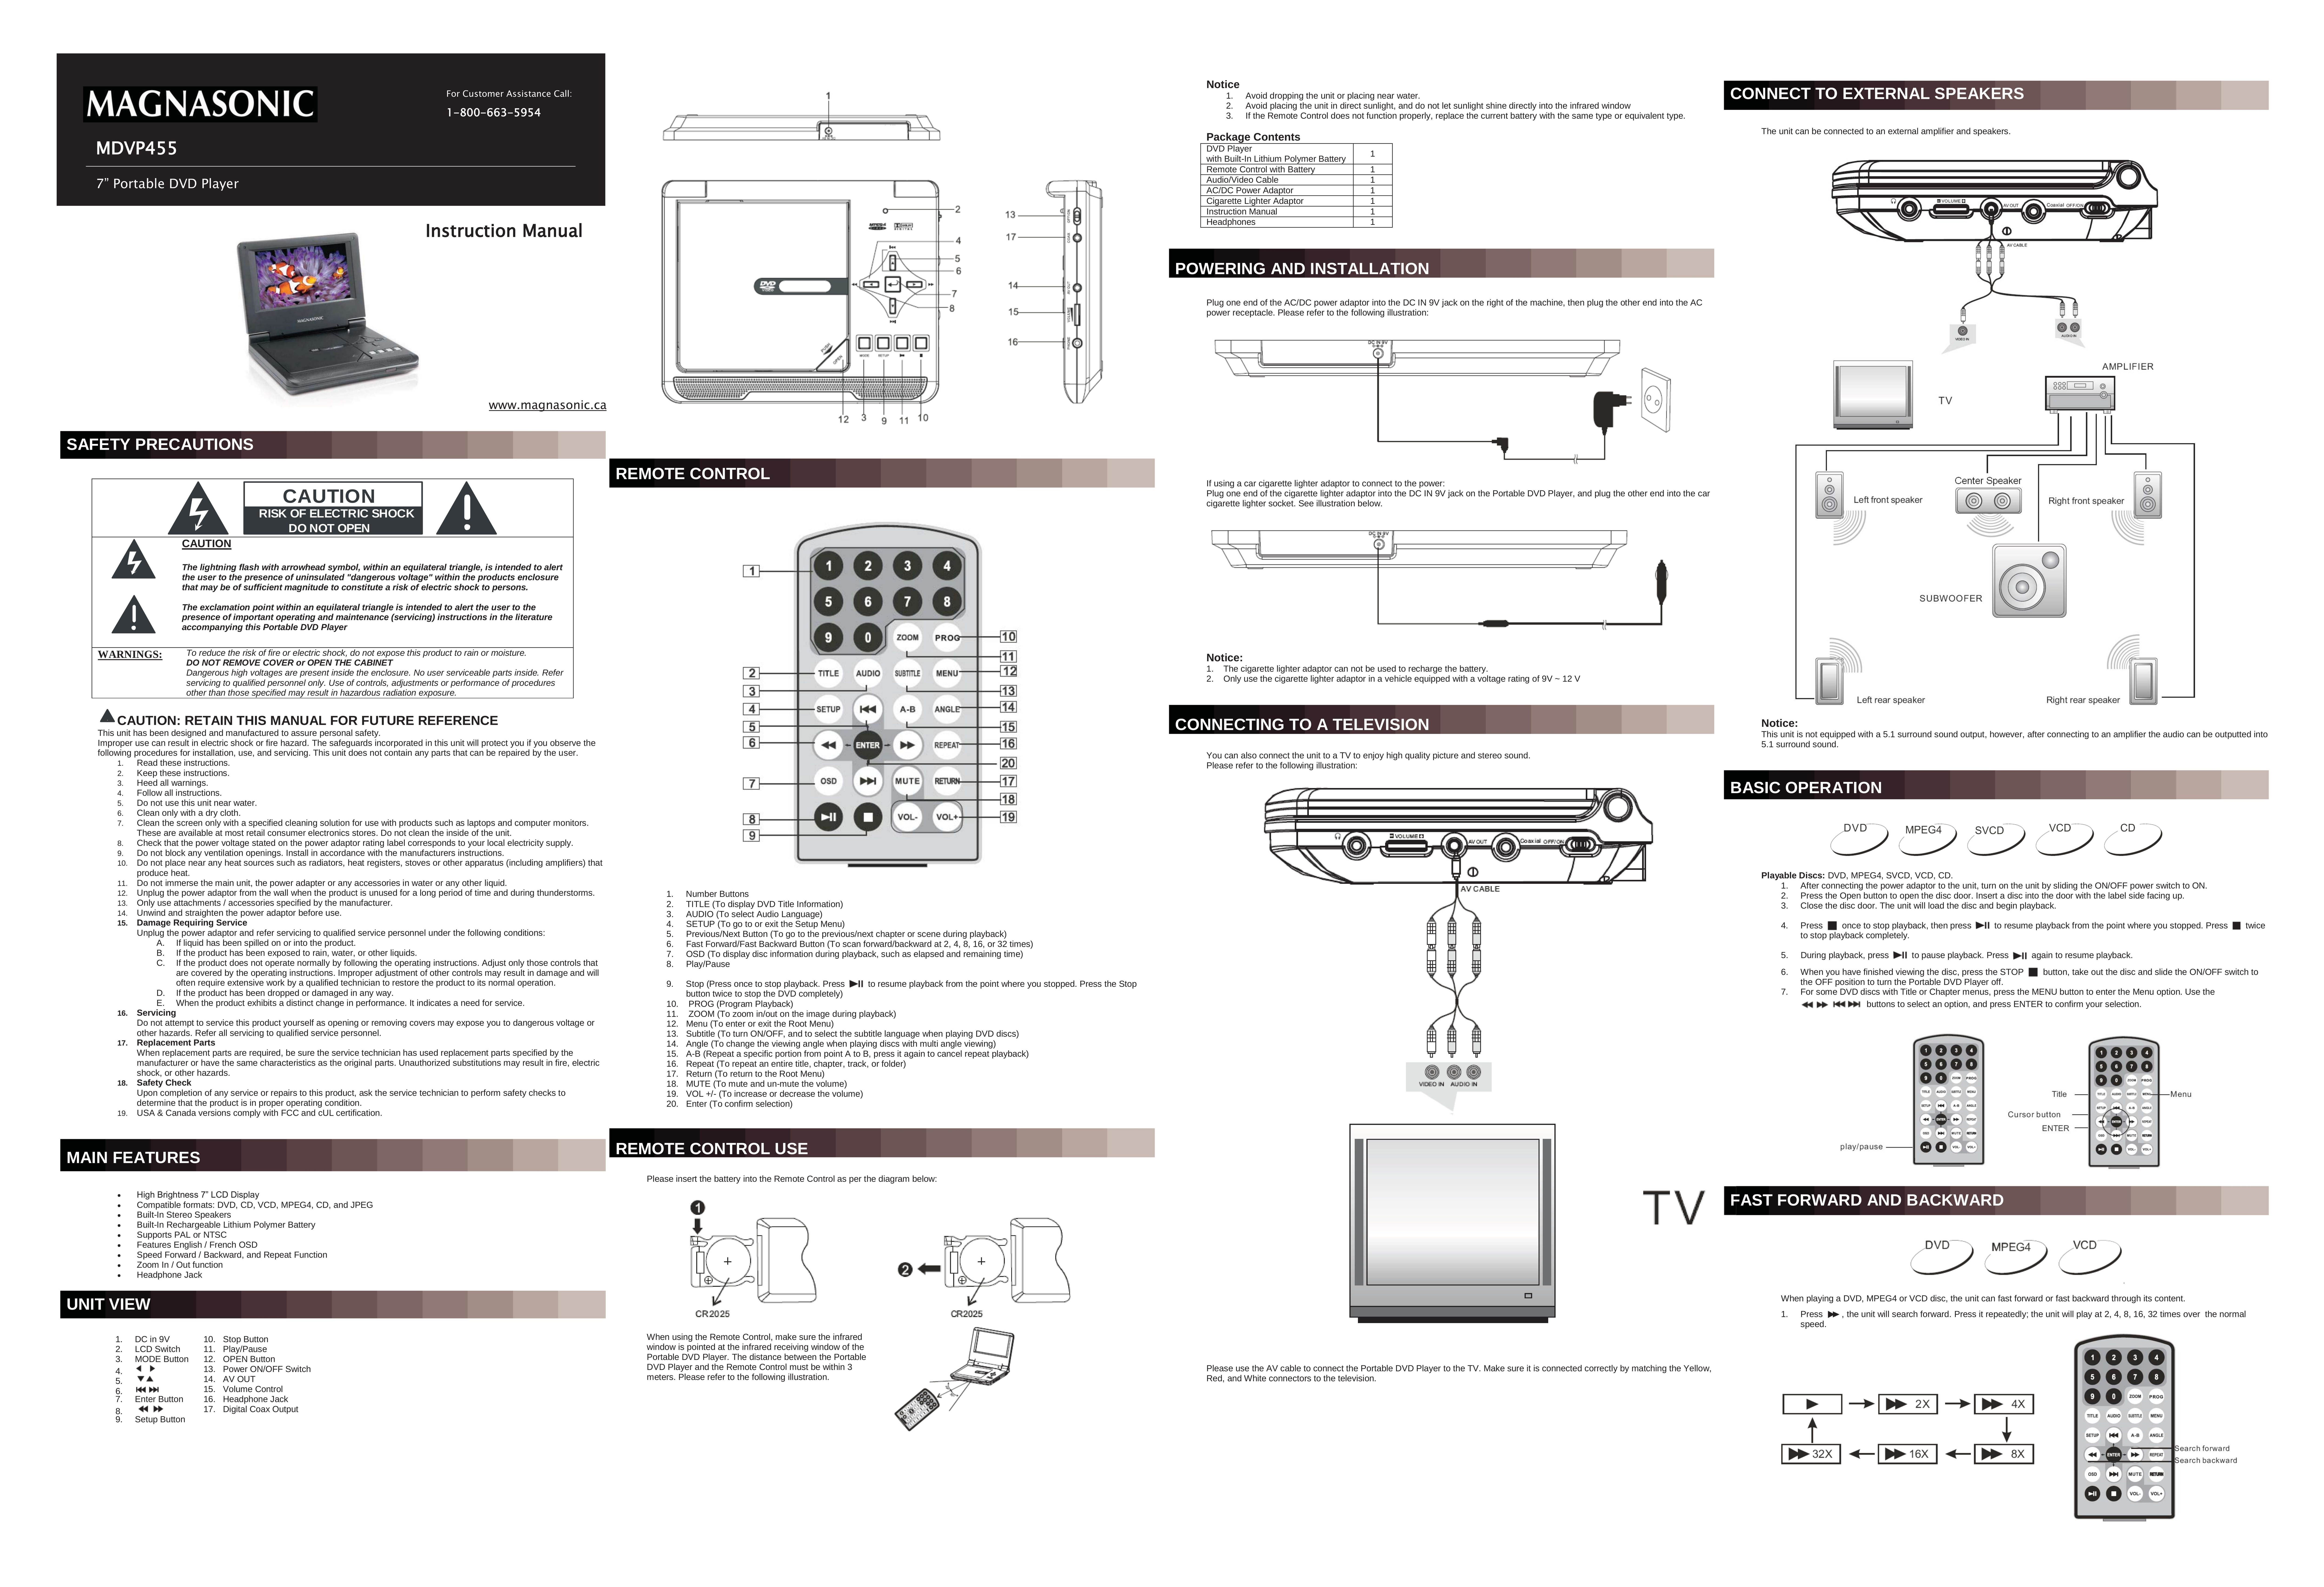 Magnasonic MDVP455 Projector Accessories User Manual